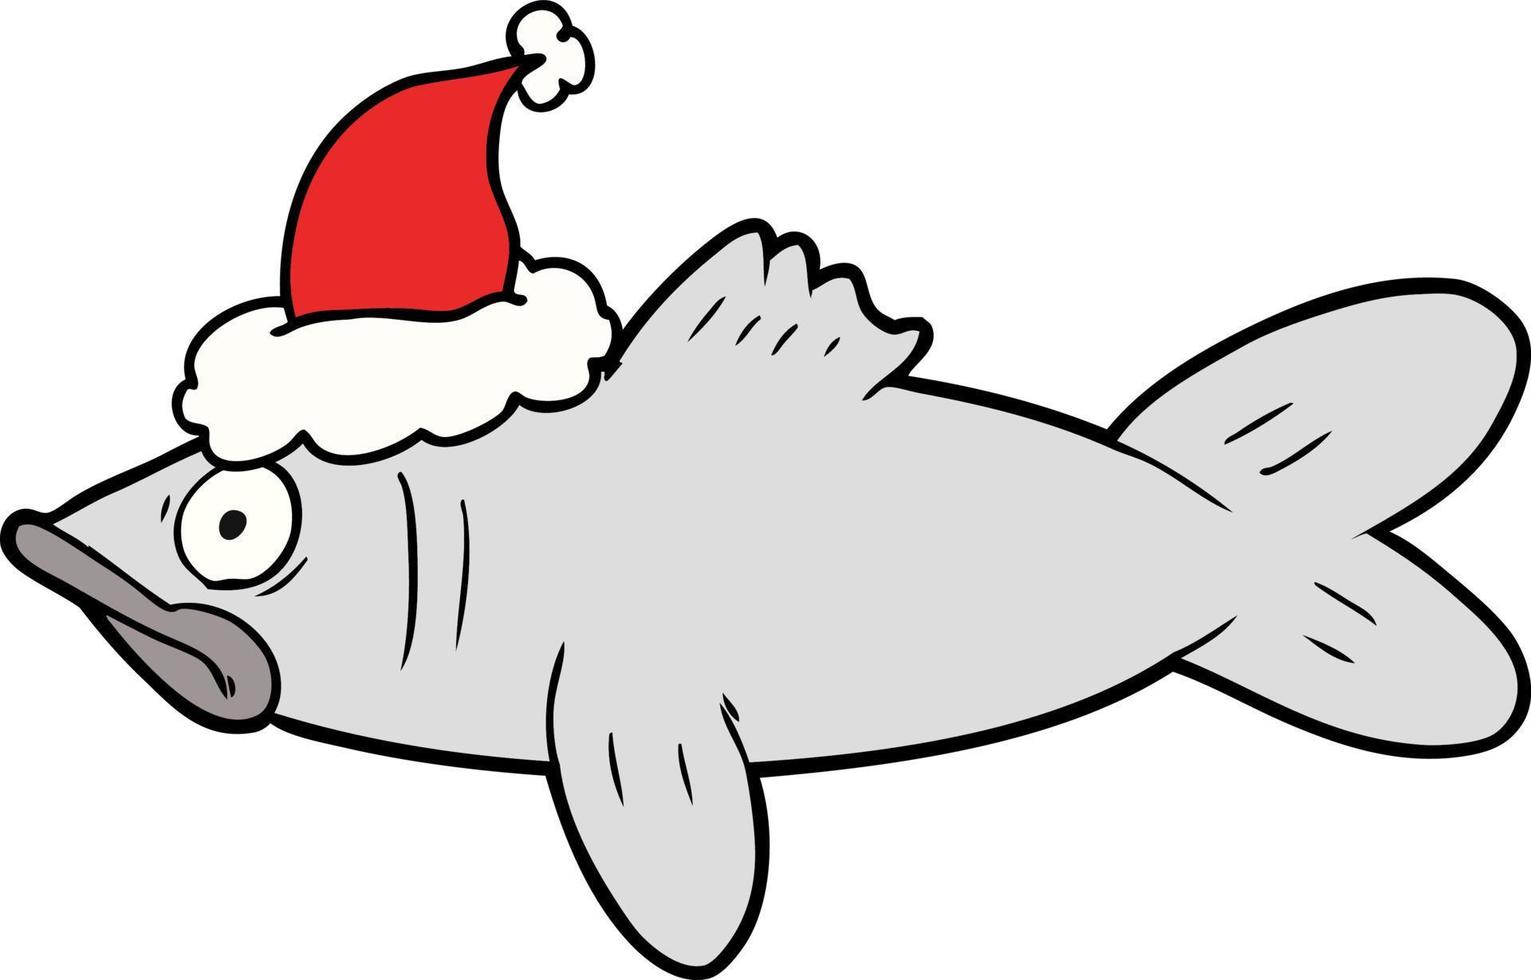 line drawing of a fish wearing santa hat vector